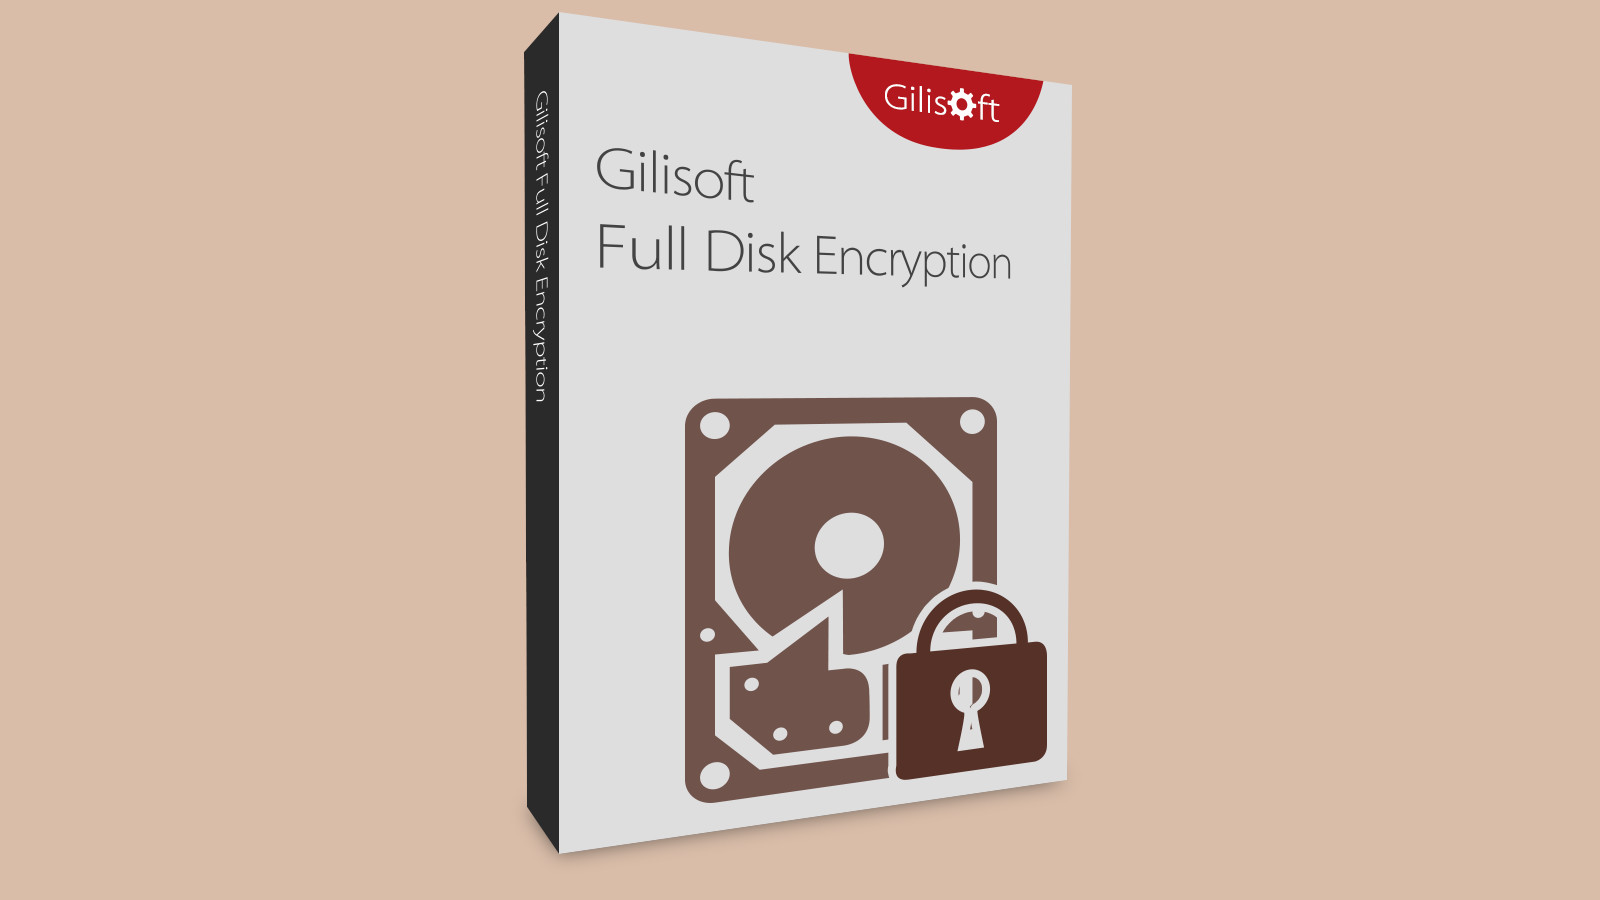 Gilisoft Full Disk Encryption CD Key, 19.72$